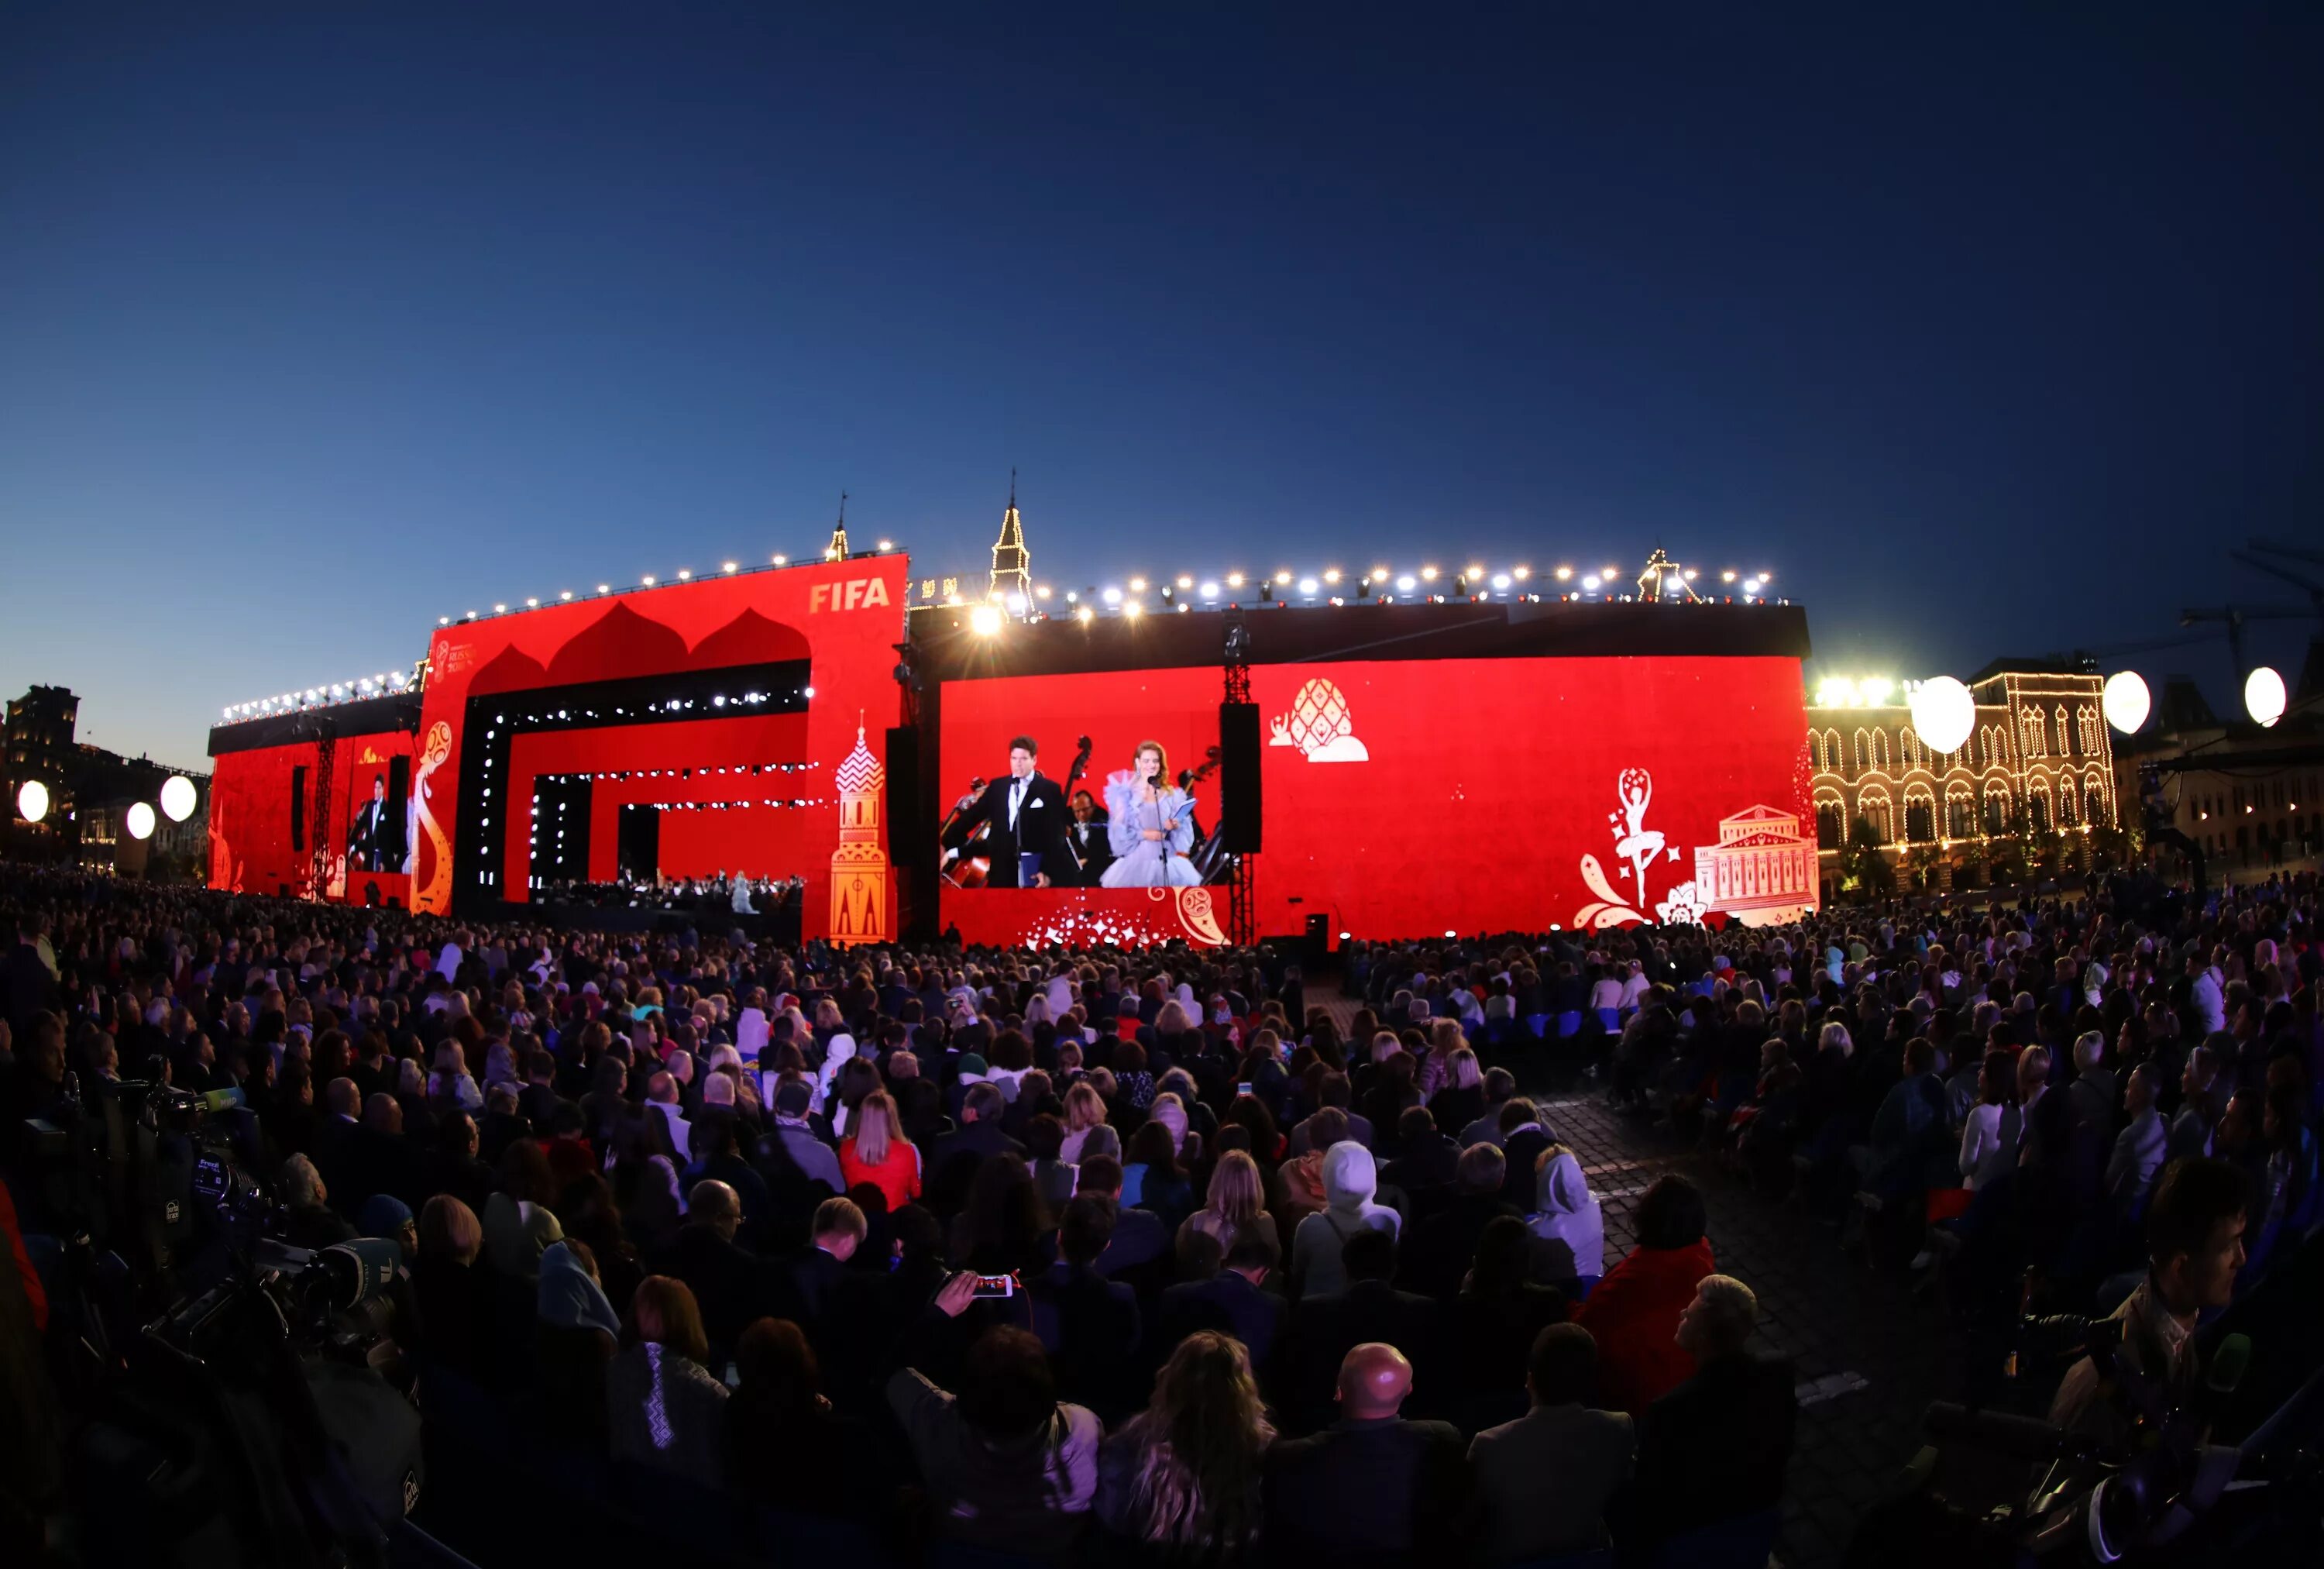 Концерт на красной площади. Концертная сцена на площади. Красный концерт.